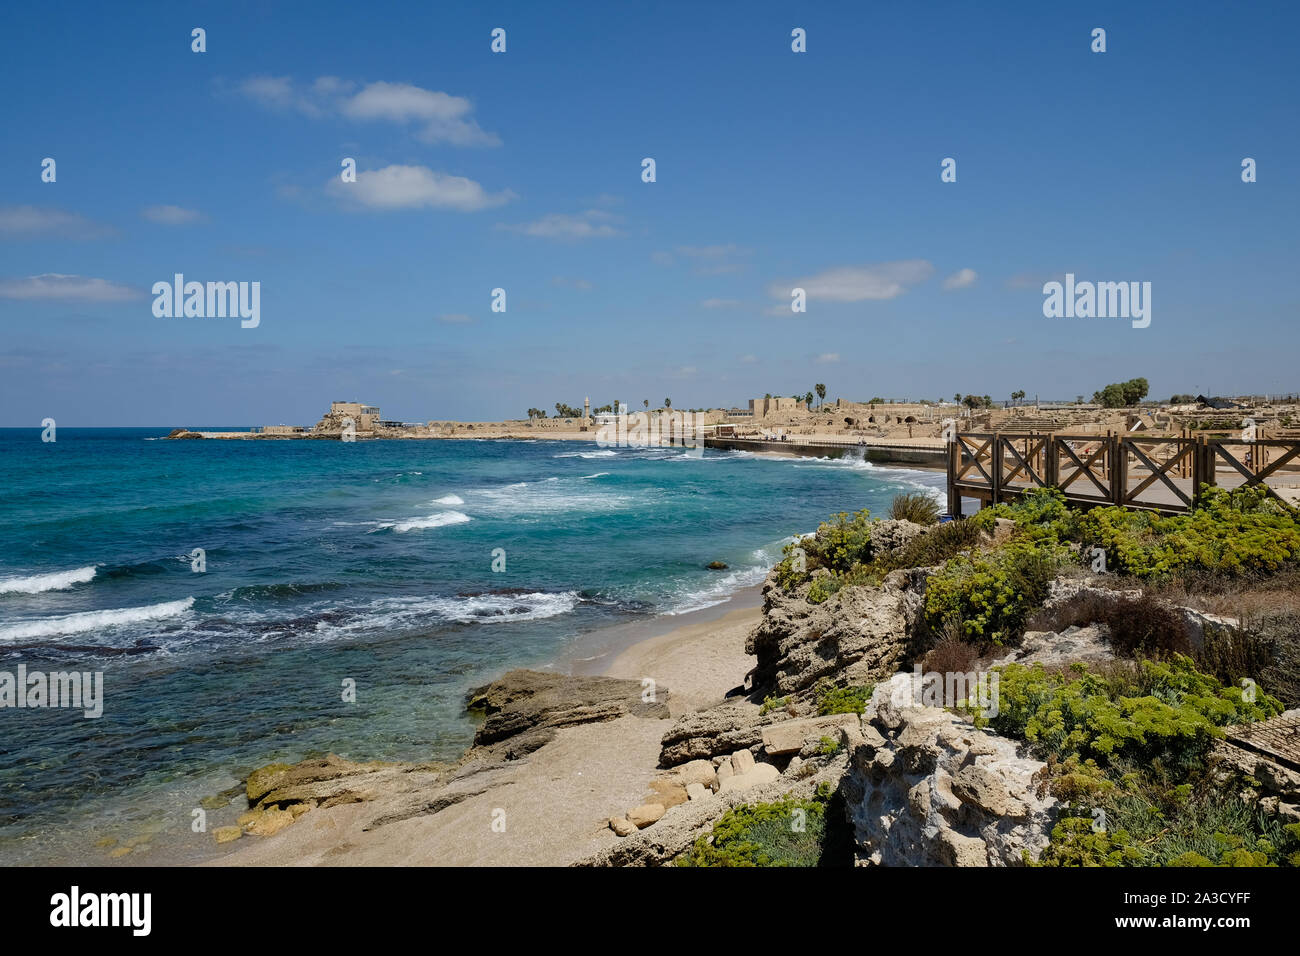 Ancient port of Caesarea in Israel Stock Photo